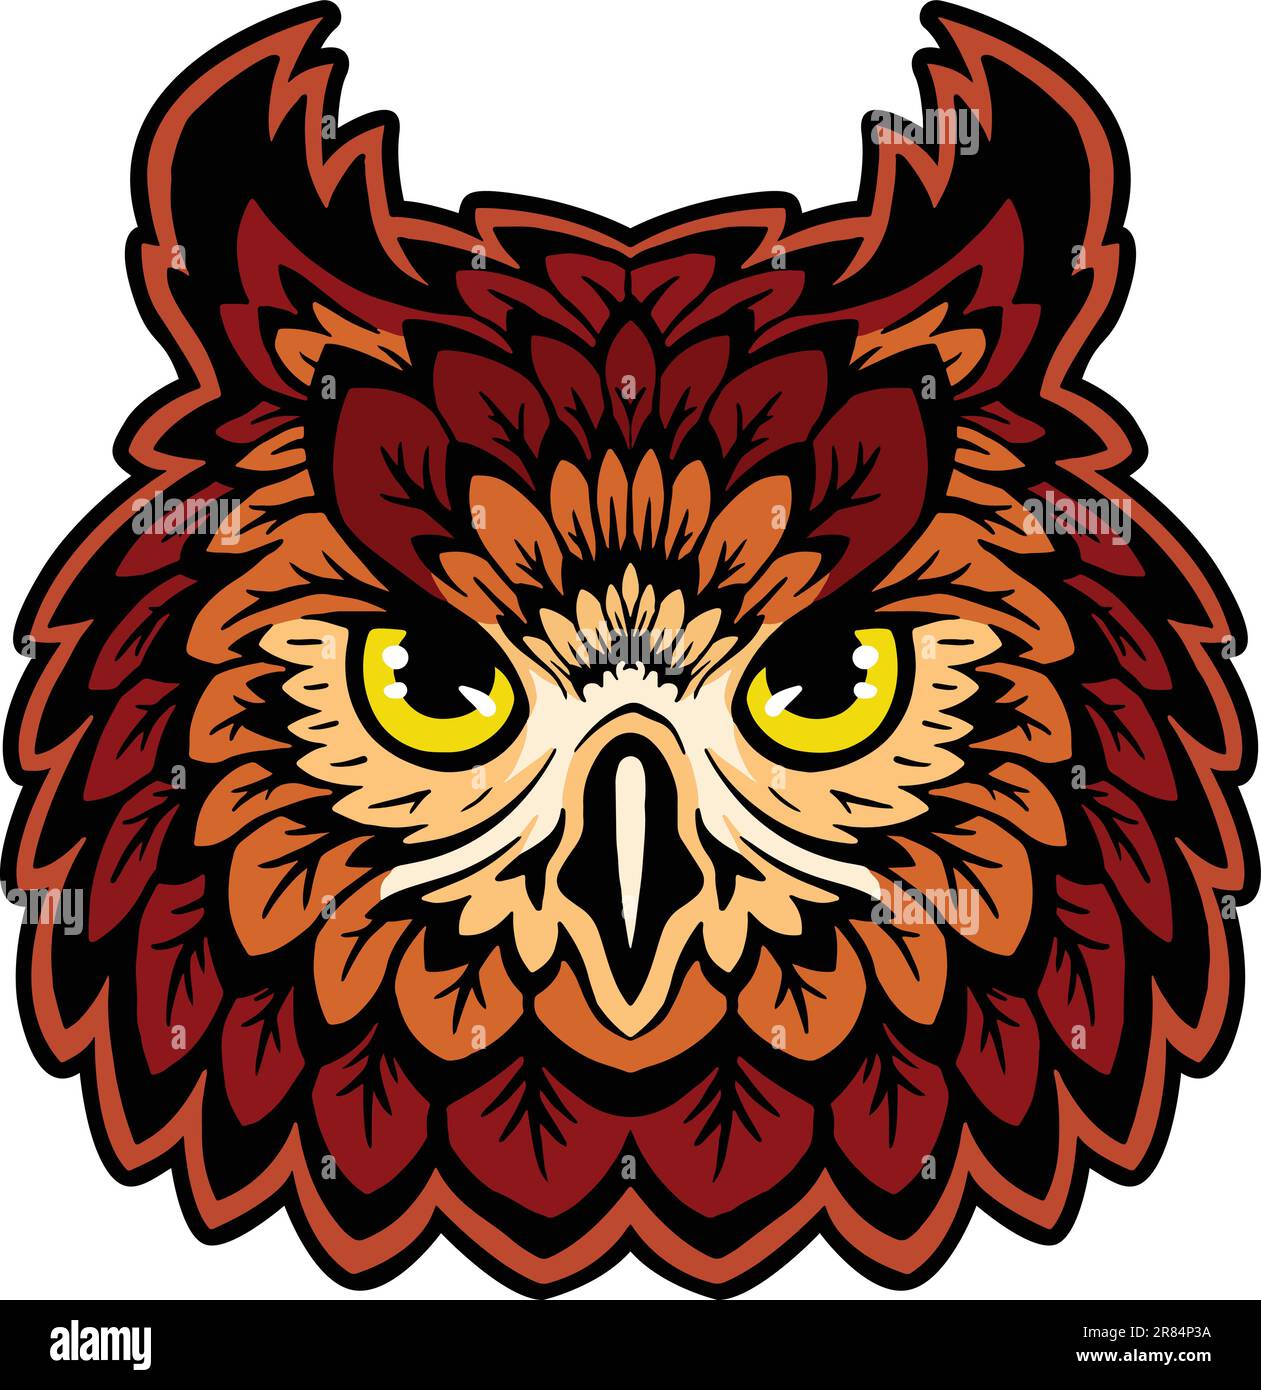 Owl Face Illustration. Sky. Forest. Vector Stock Vector Image & Art - Alamy